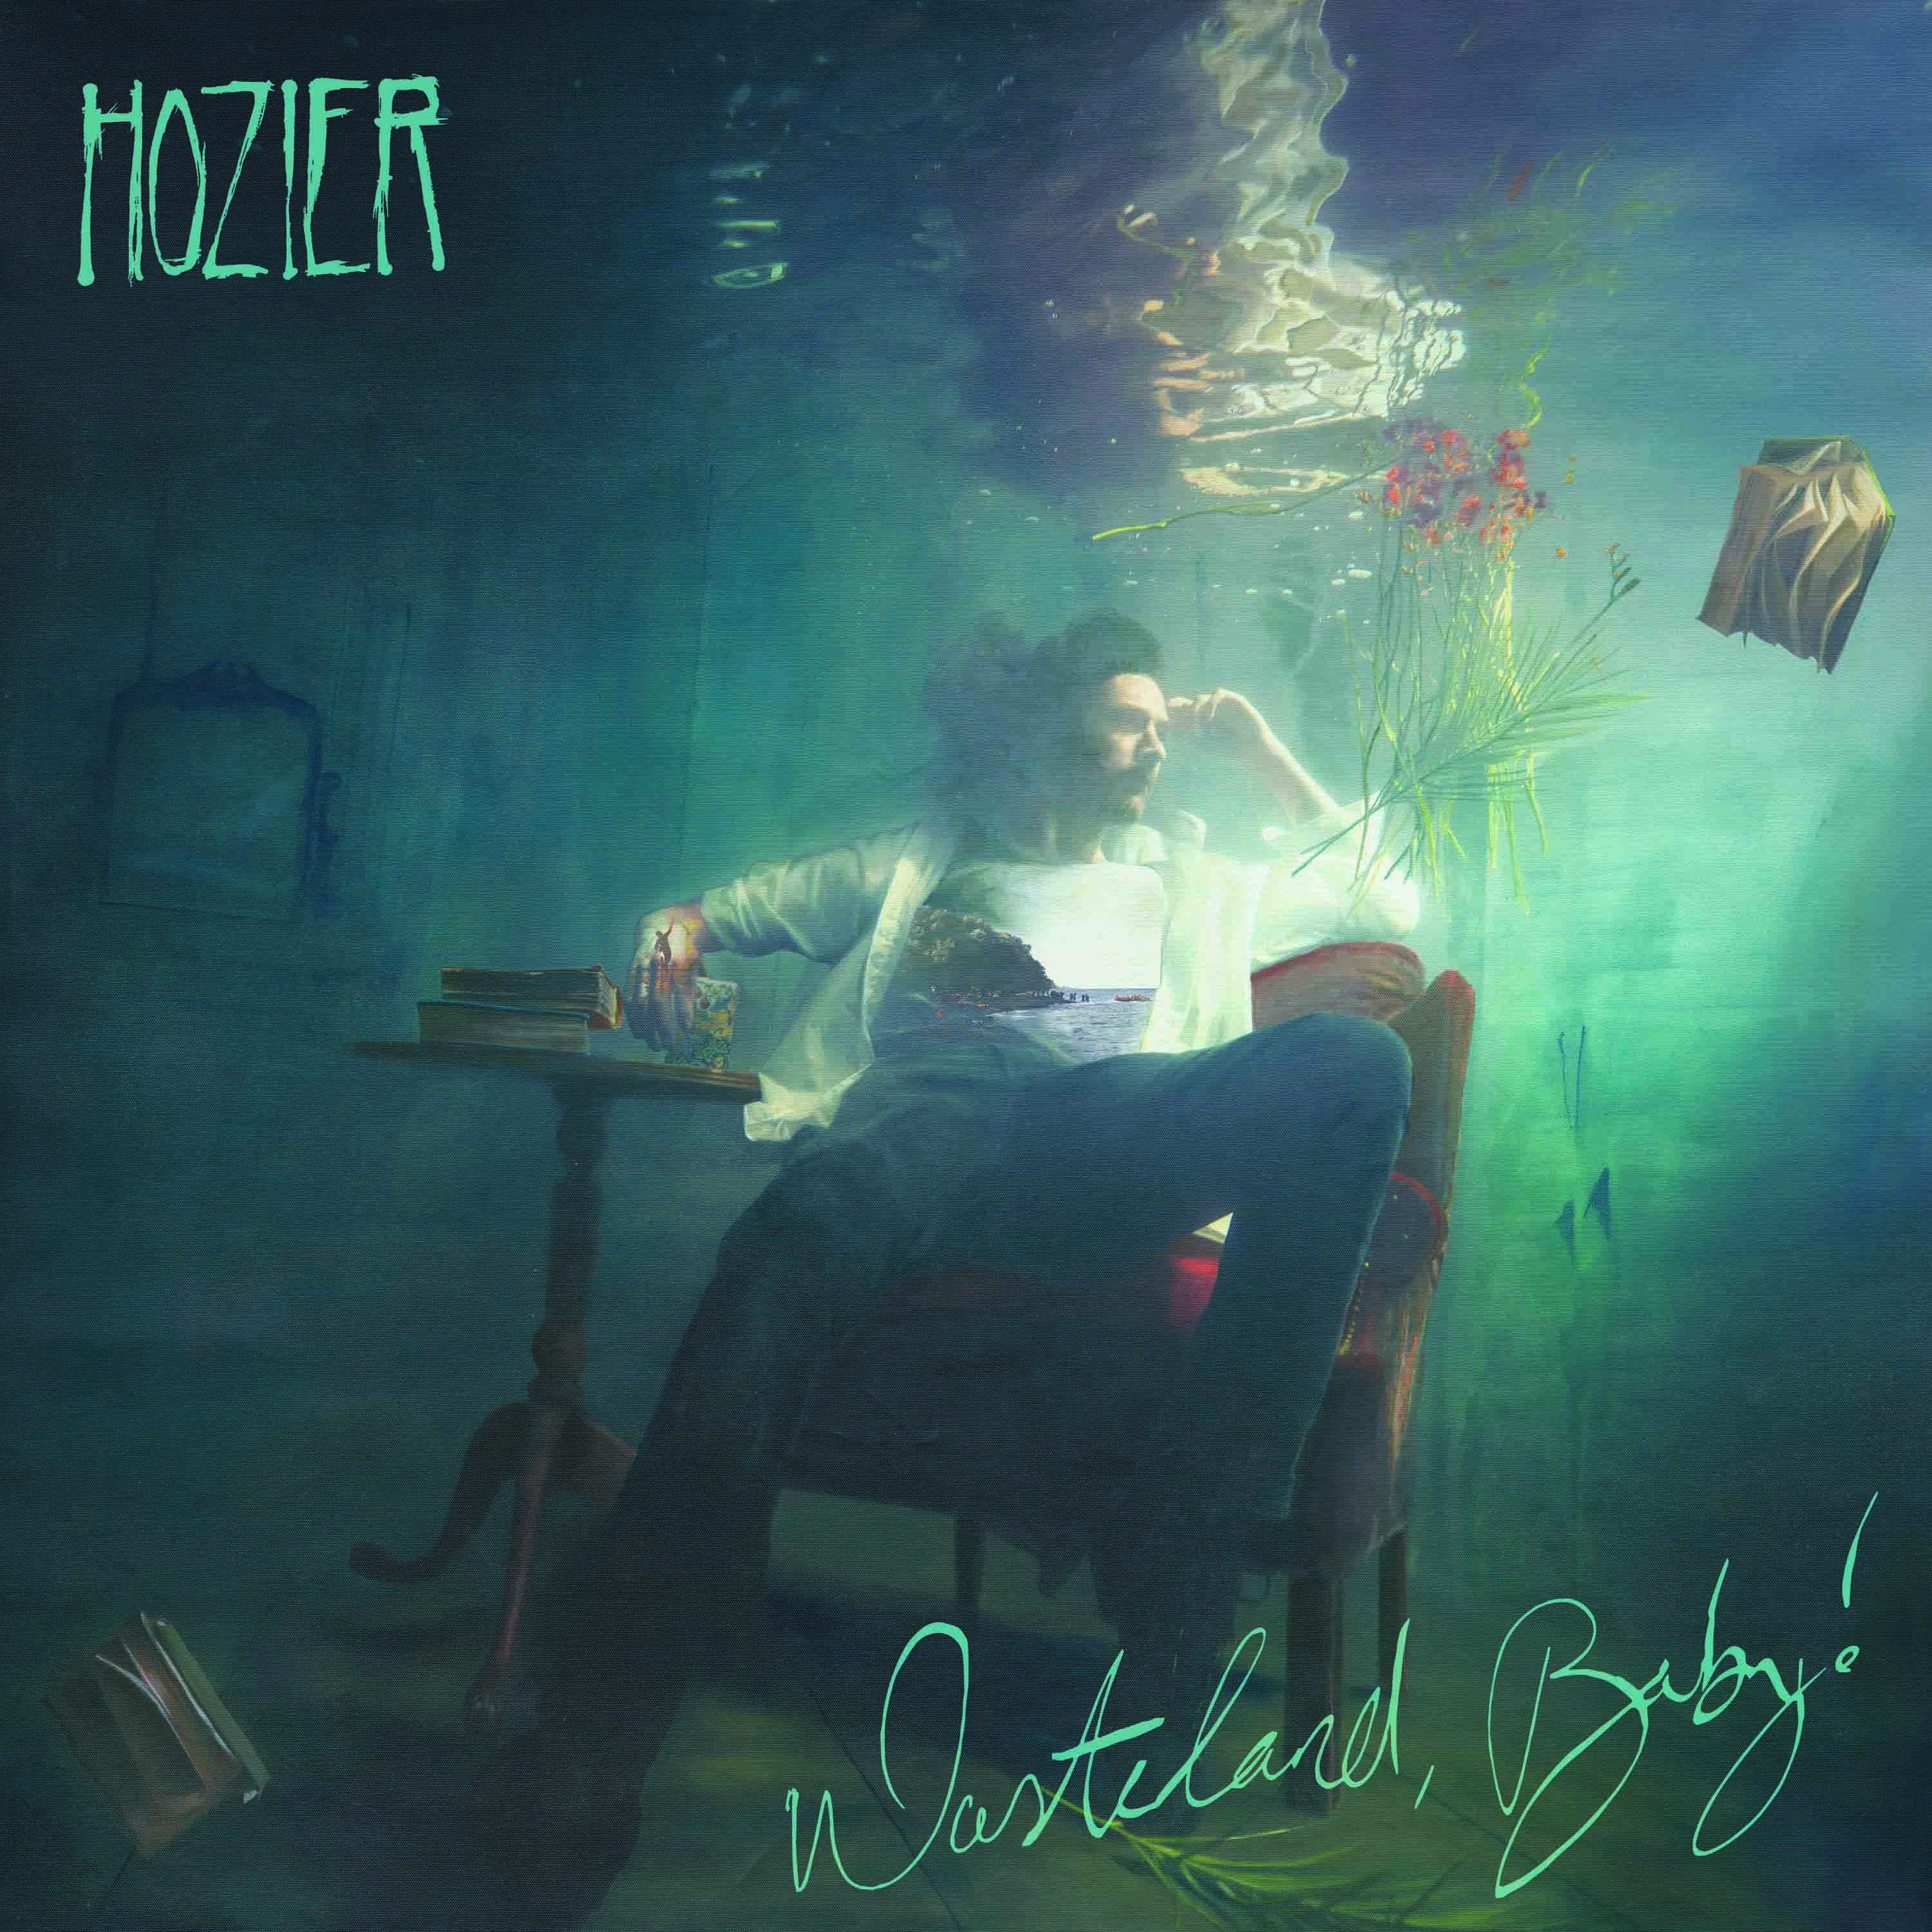 Hozier - Wasteland, Baby! (Album Review)